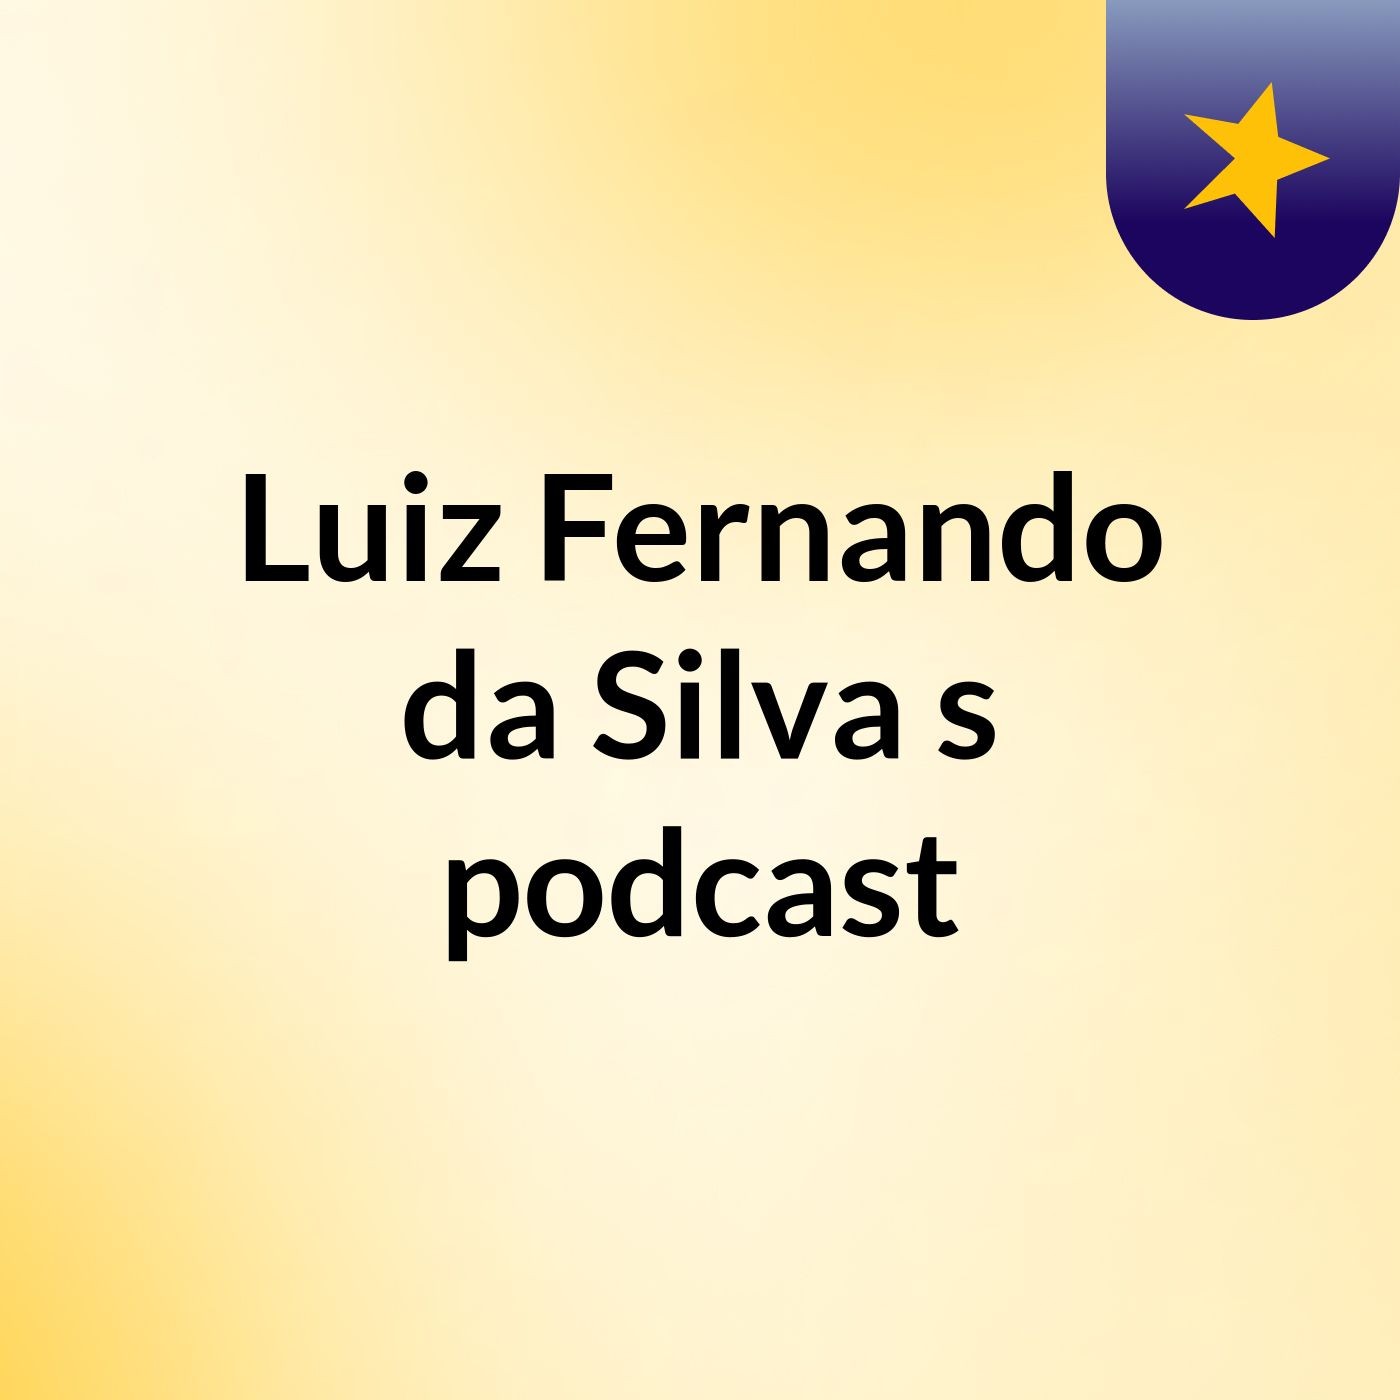 Luiz Fernando da Silva's podcast